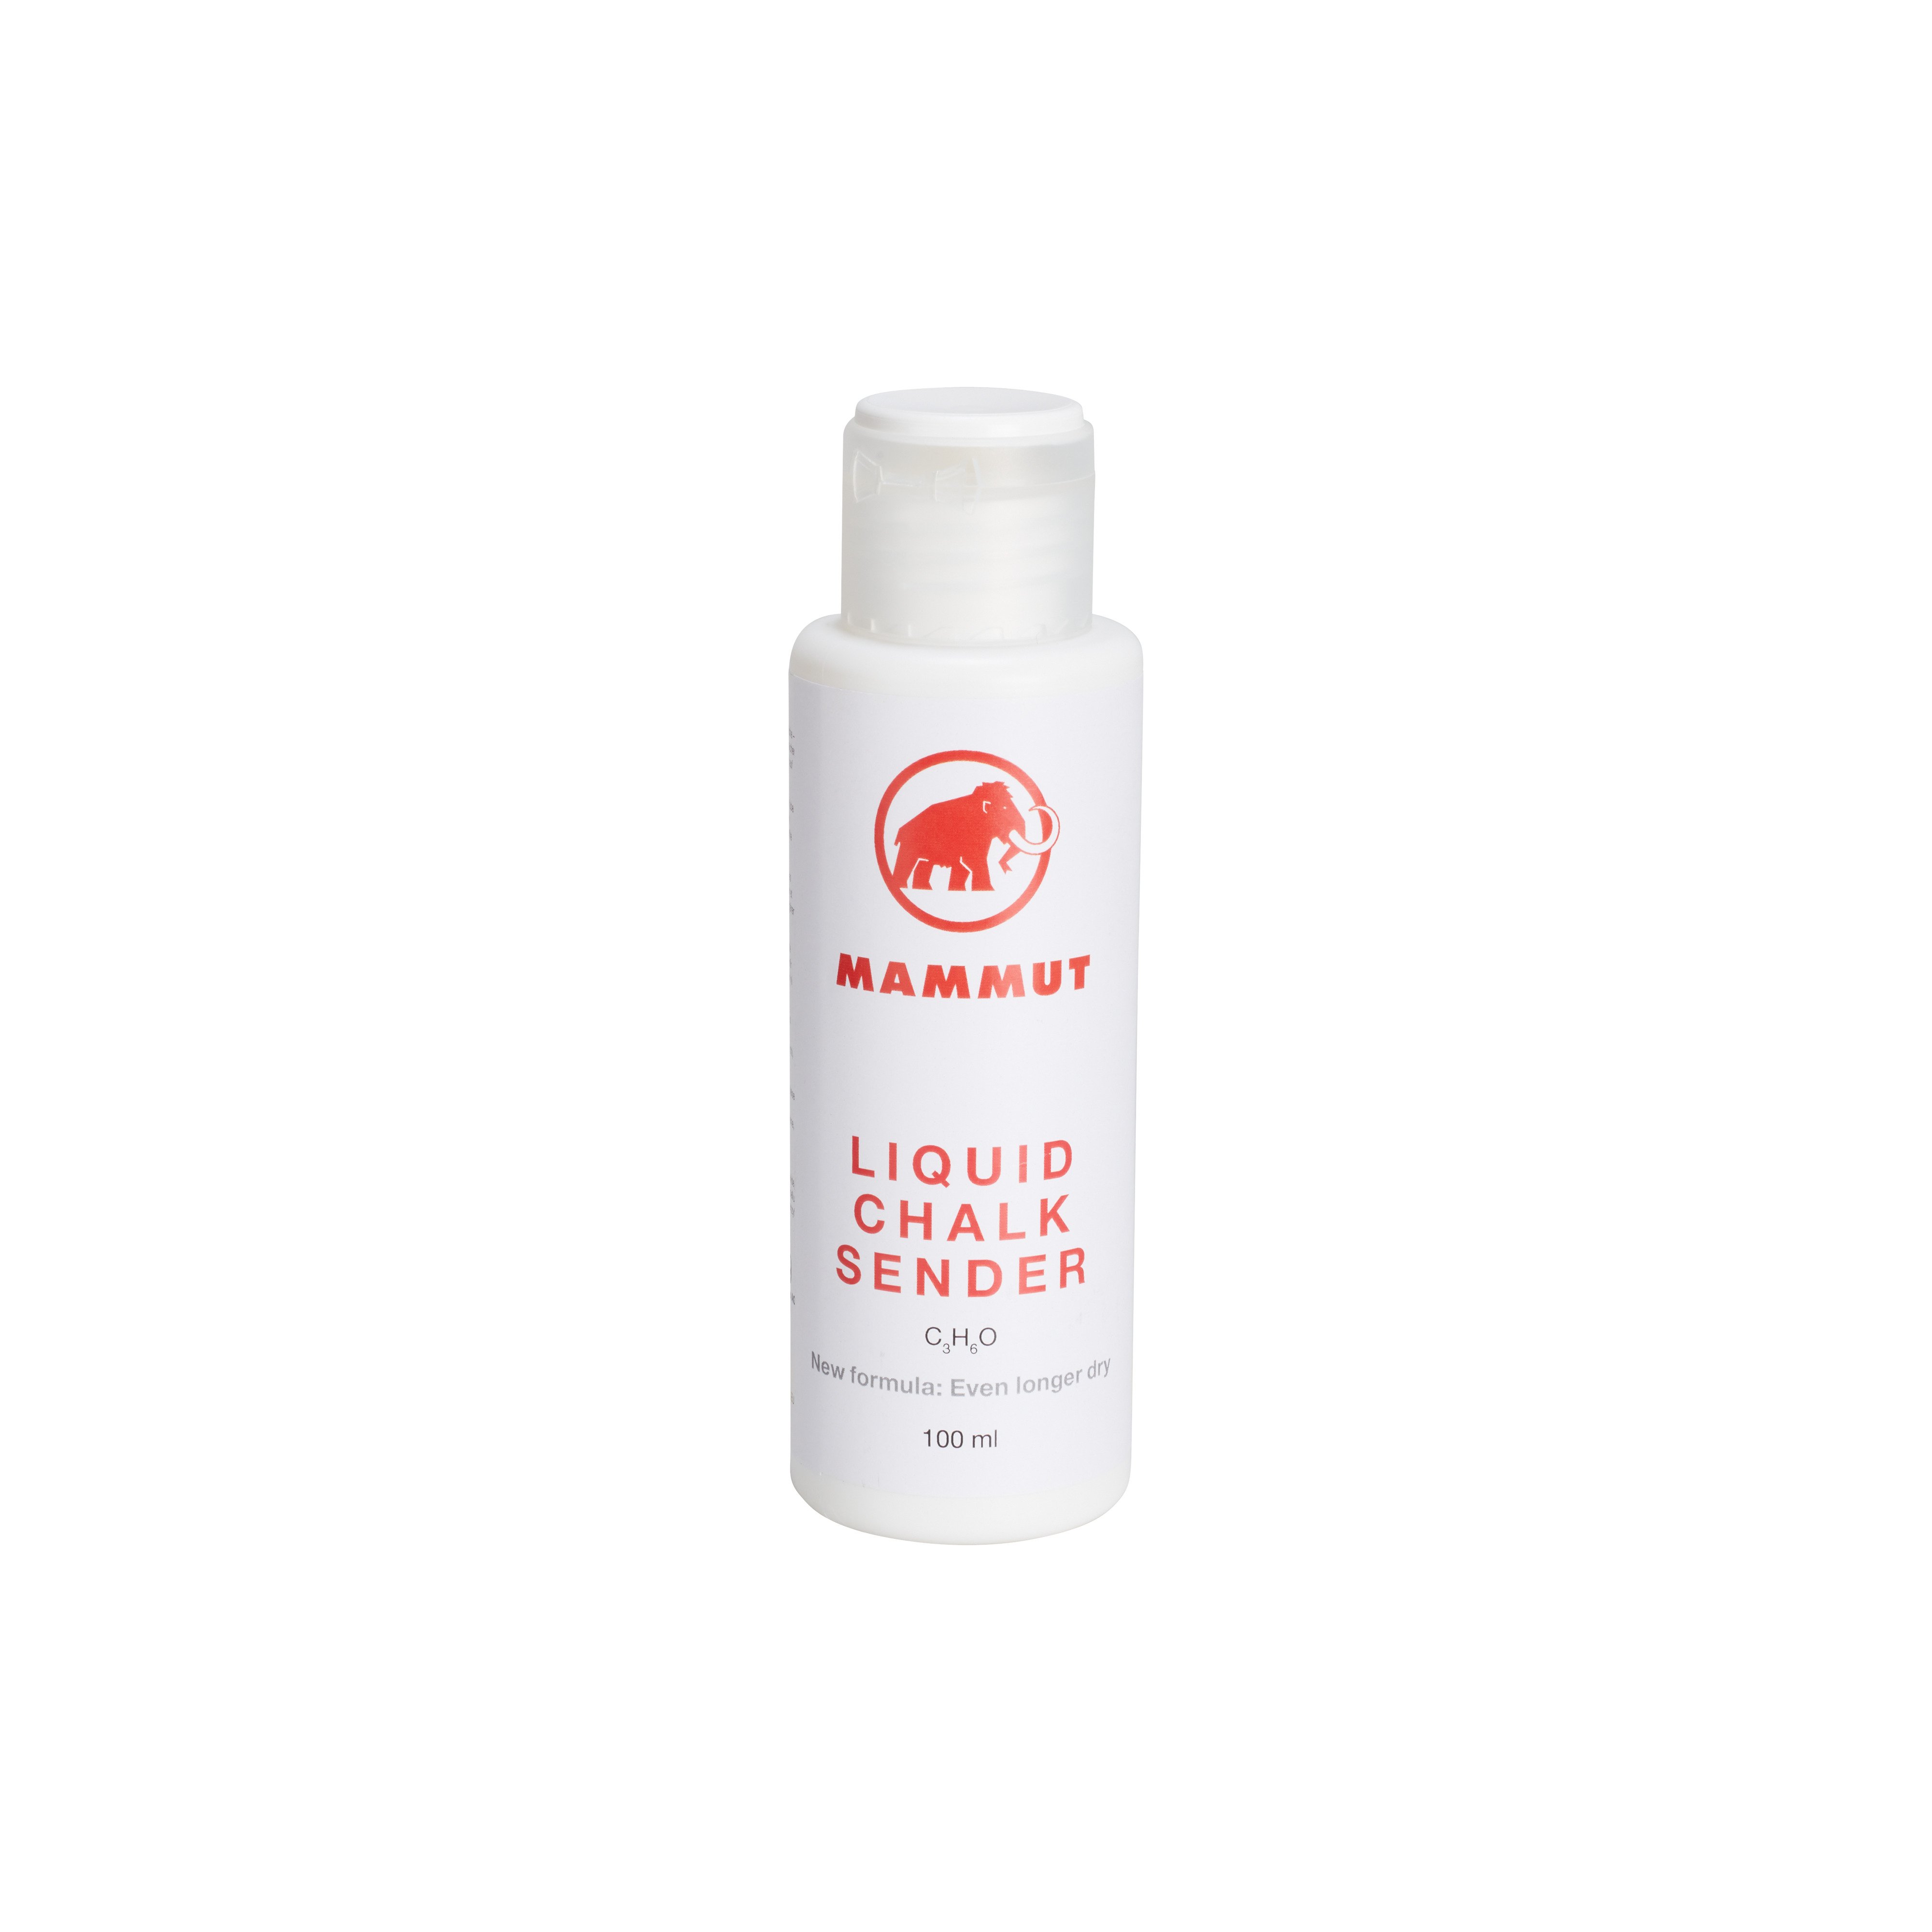 Liquid Chalk Sender 100 ml - neutral, one size product image